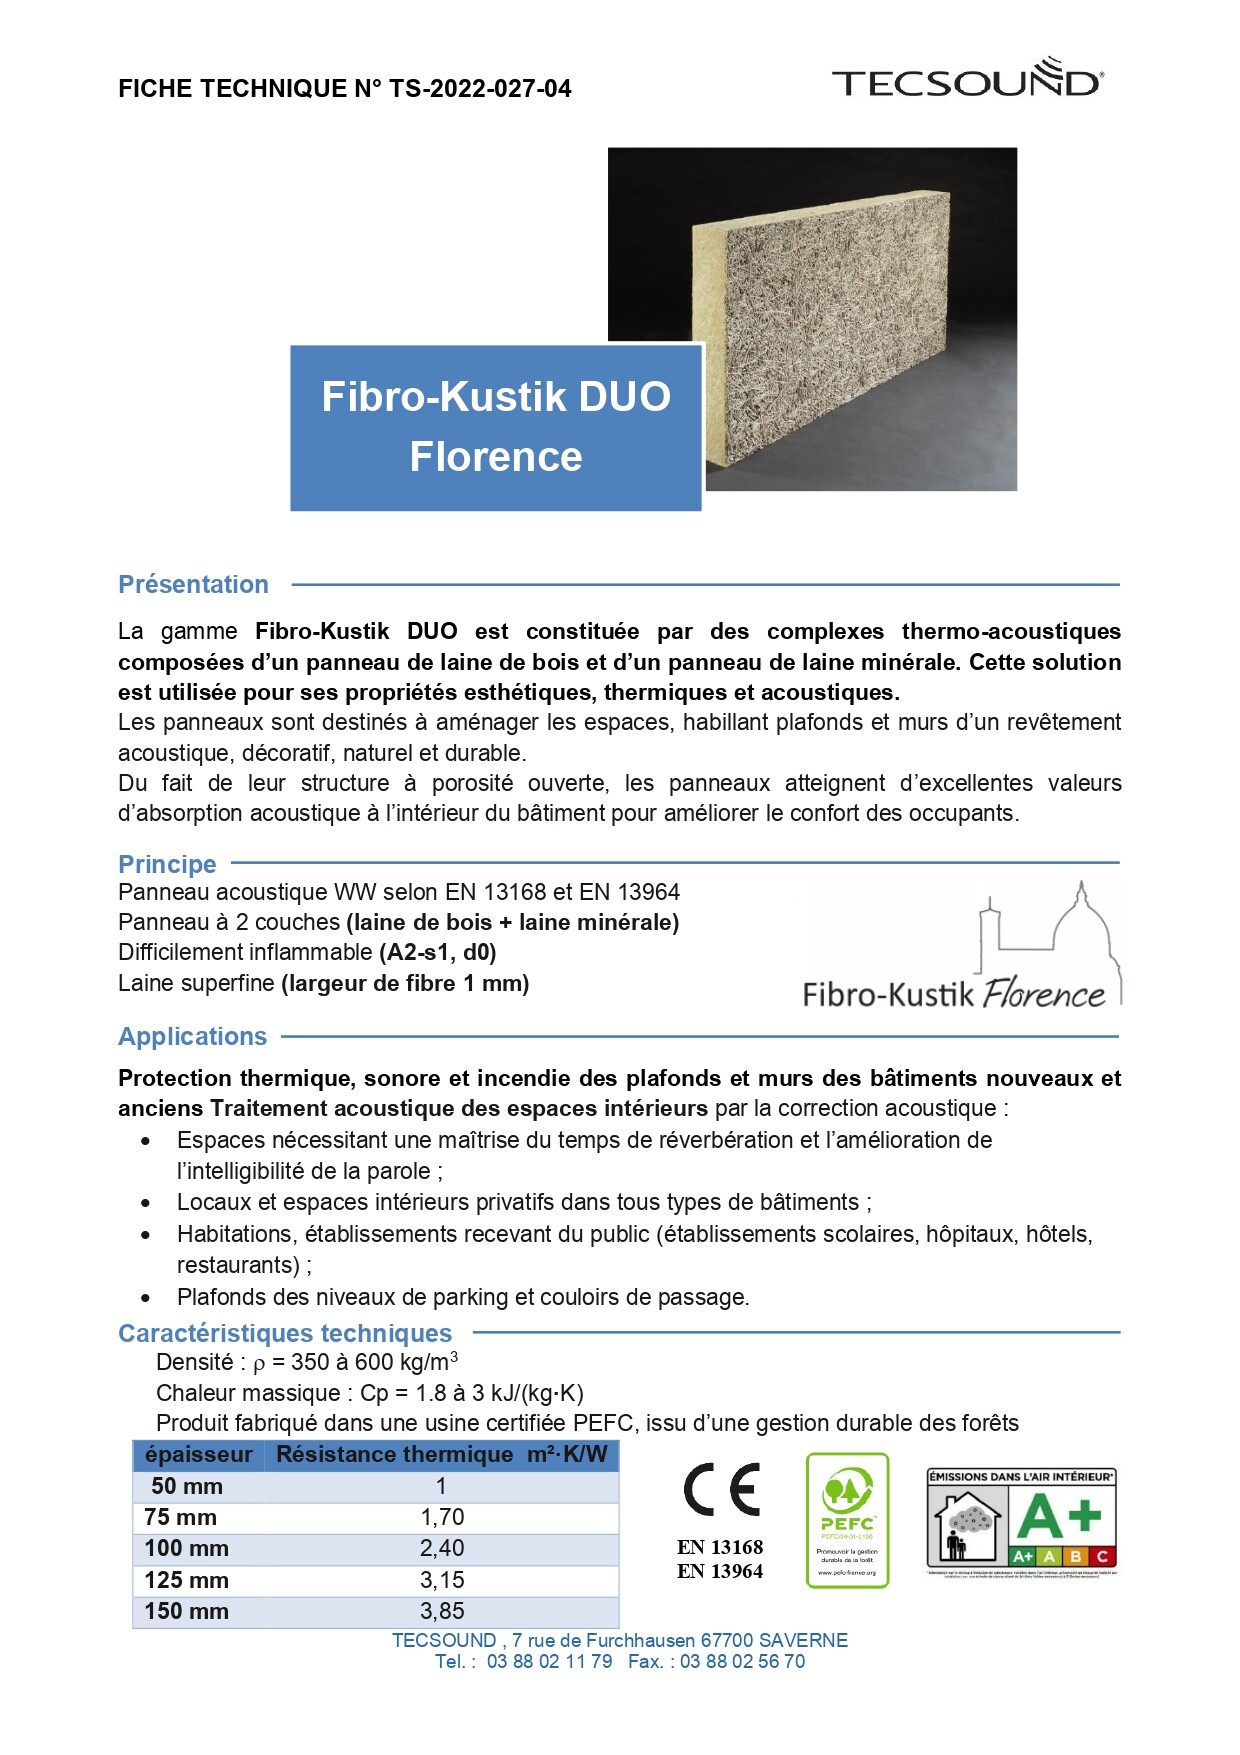 FT_Fibro-kustik-DUO-Florence-1_page-0001.jpg